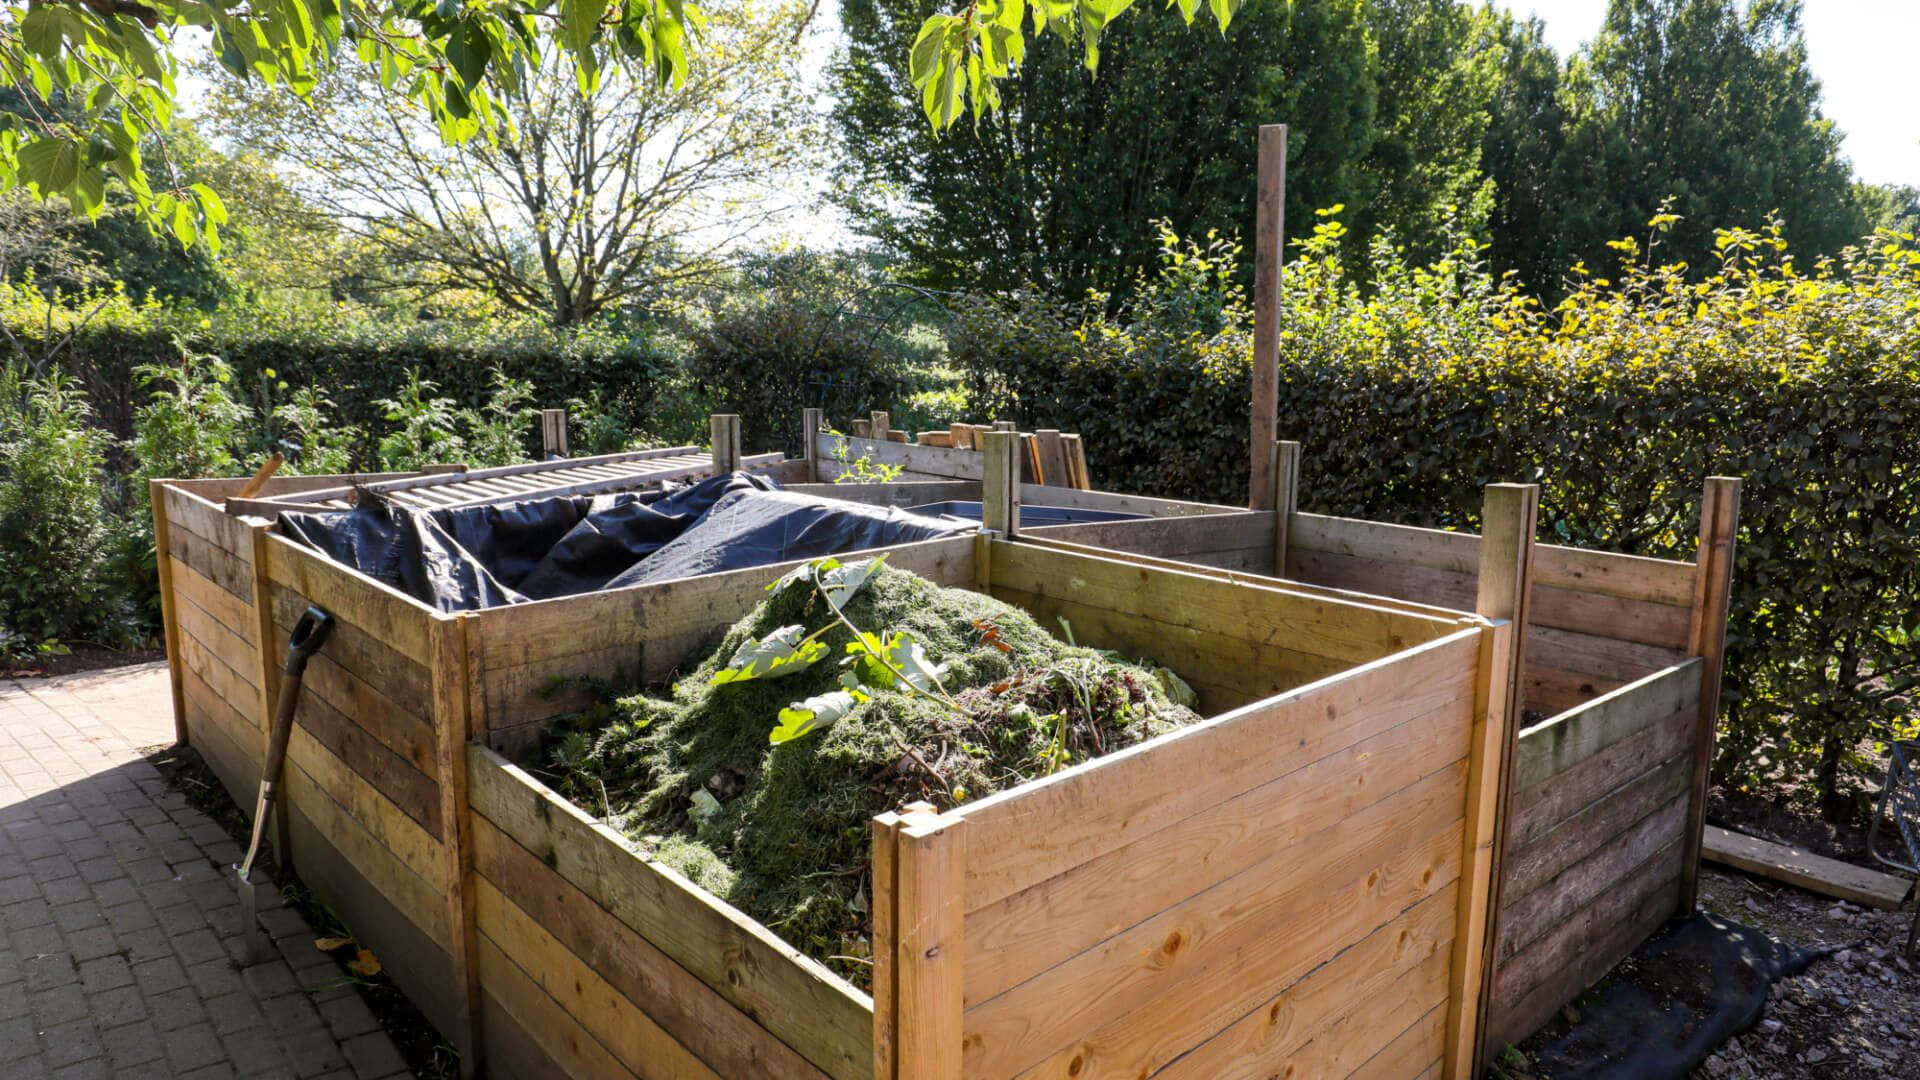 A fresh compost pile in a garden setting Wallpaper